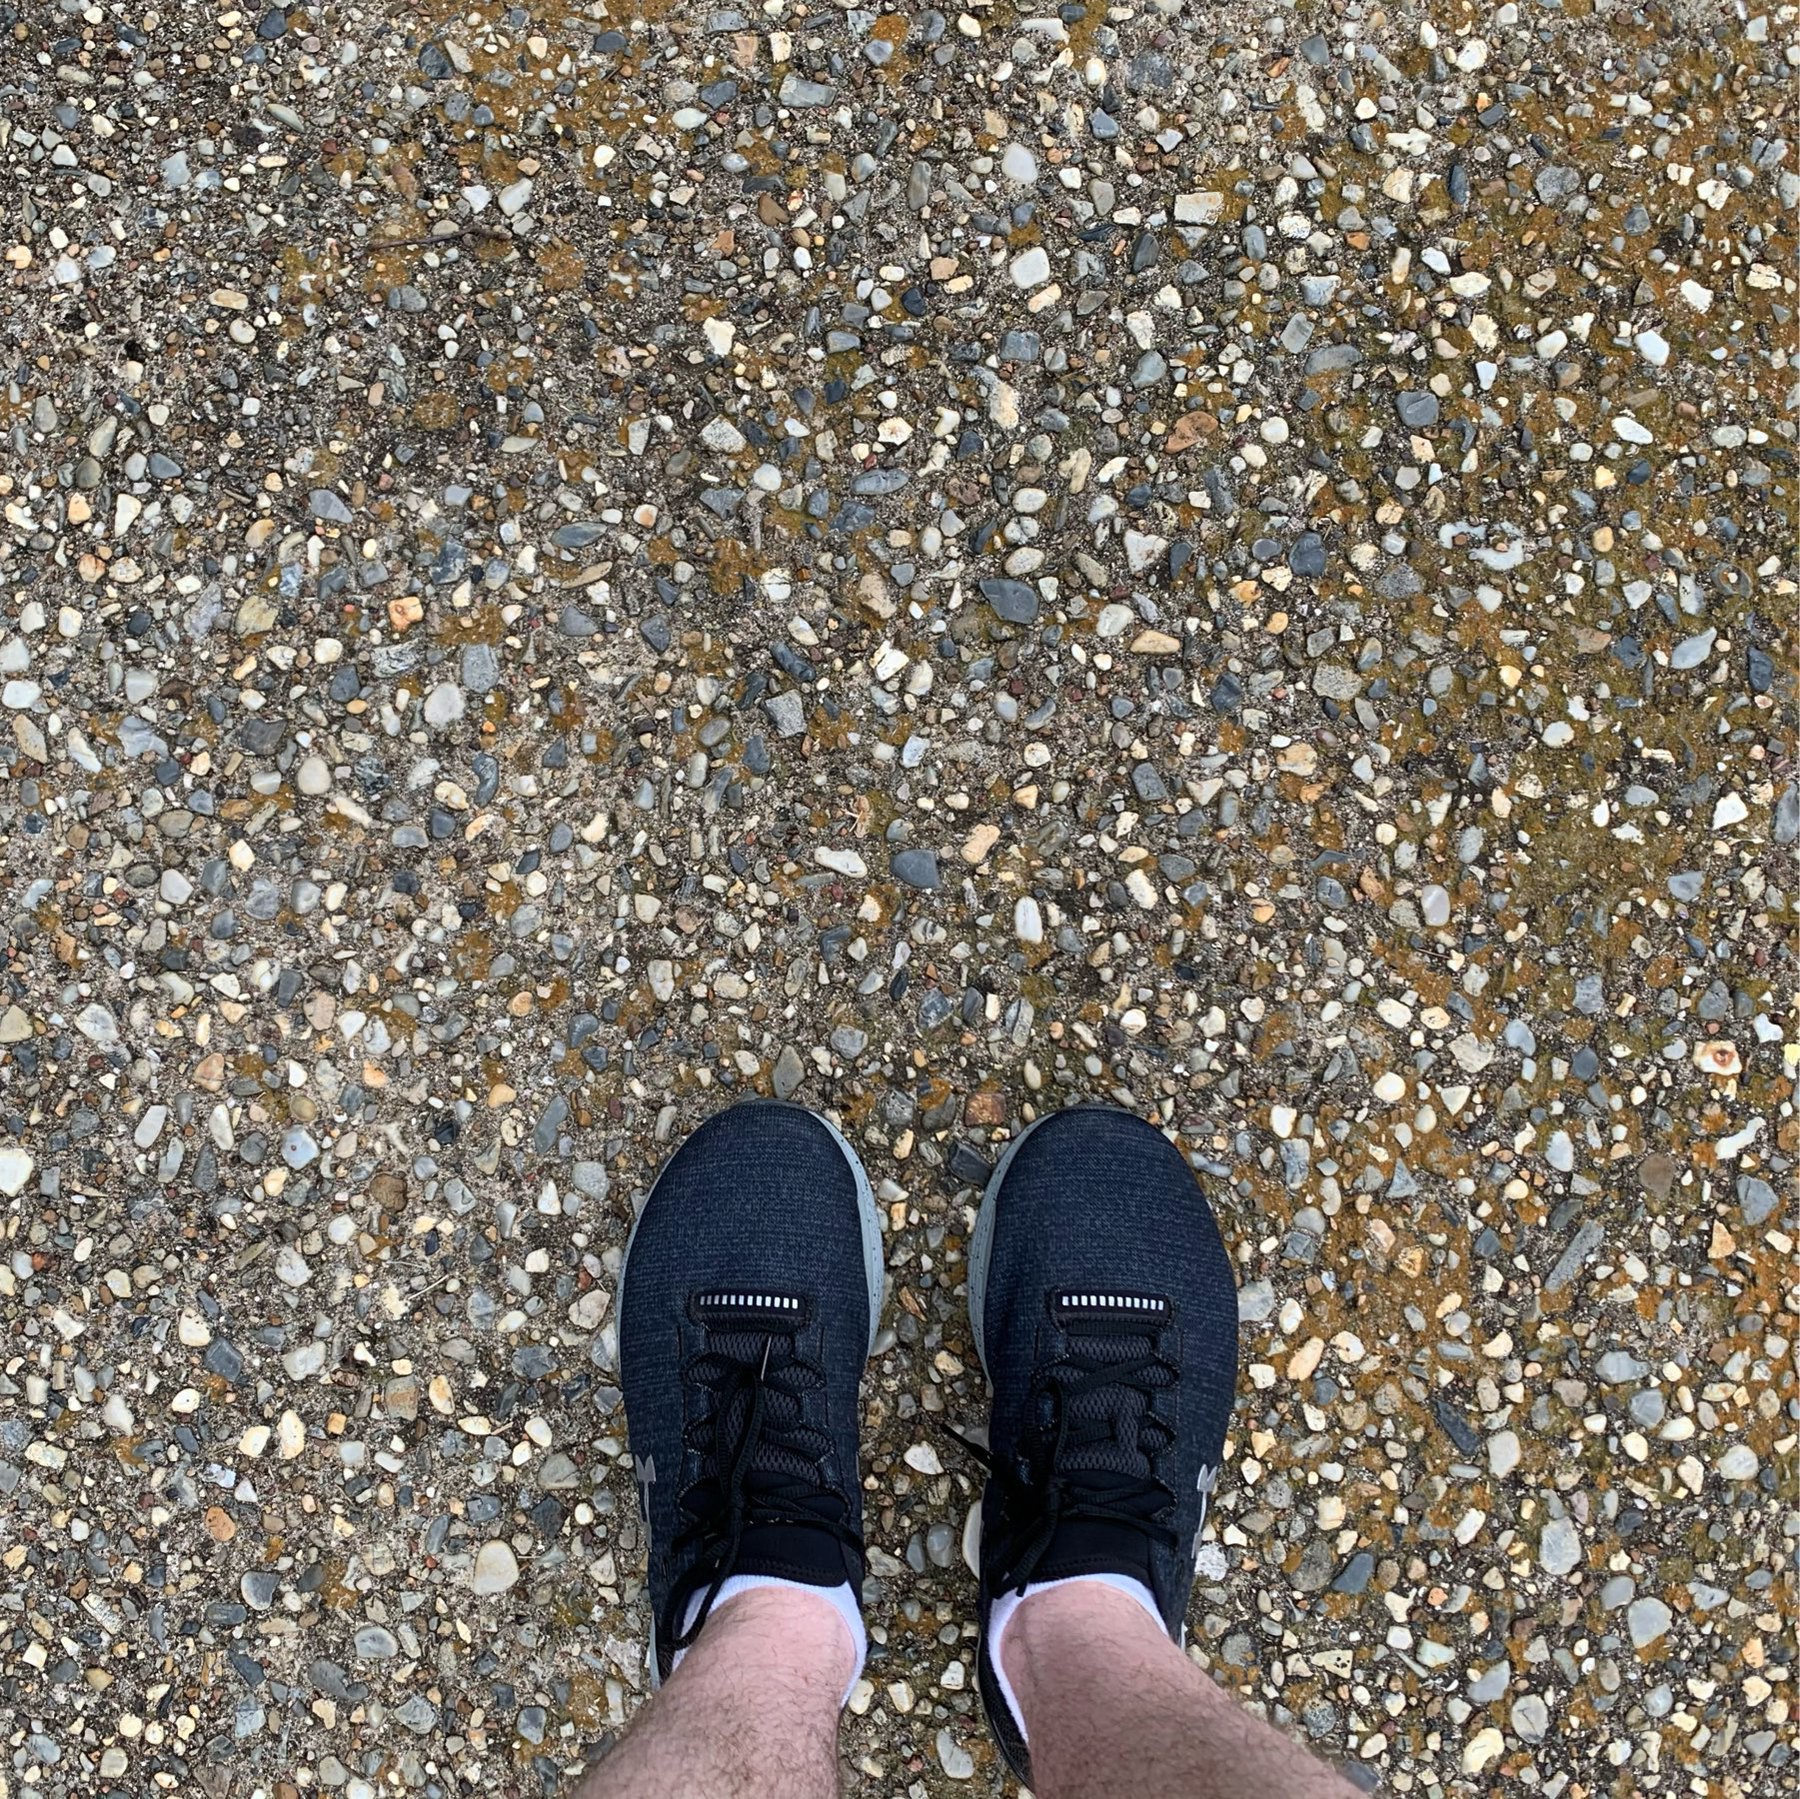 Walking shoes